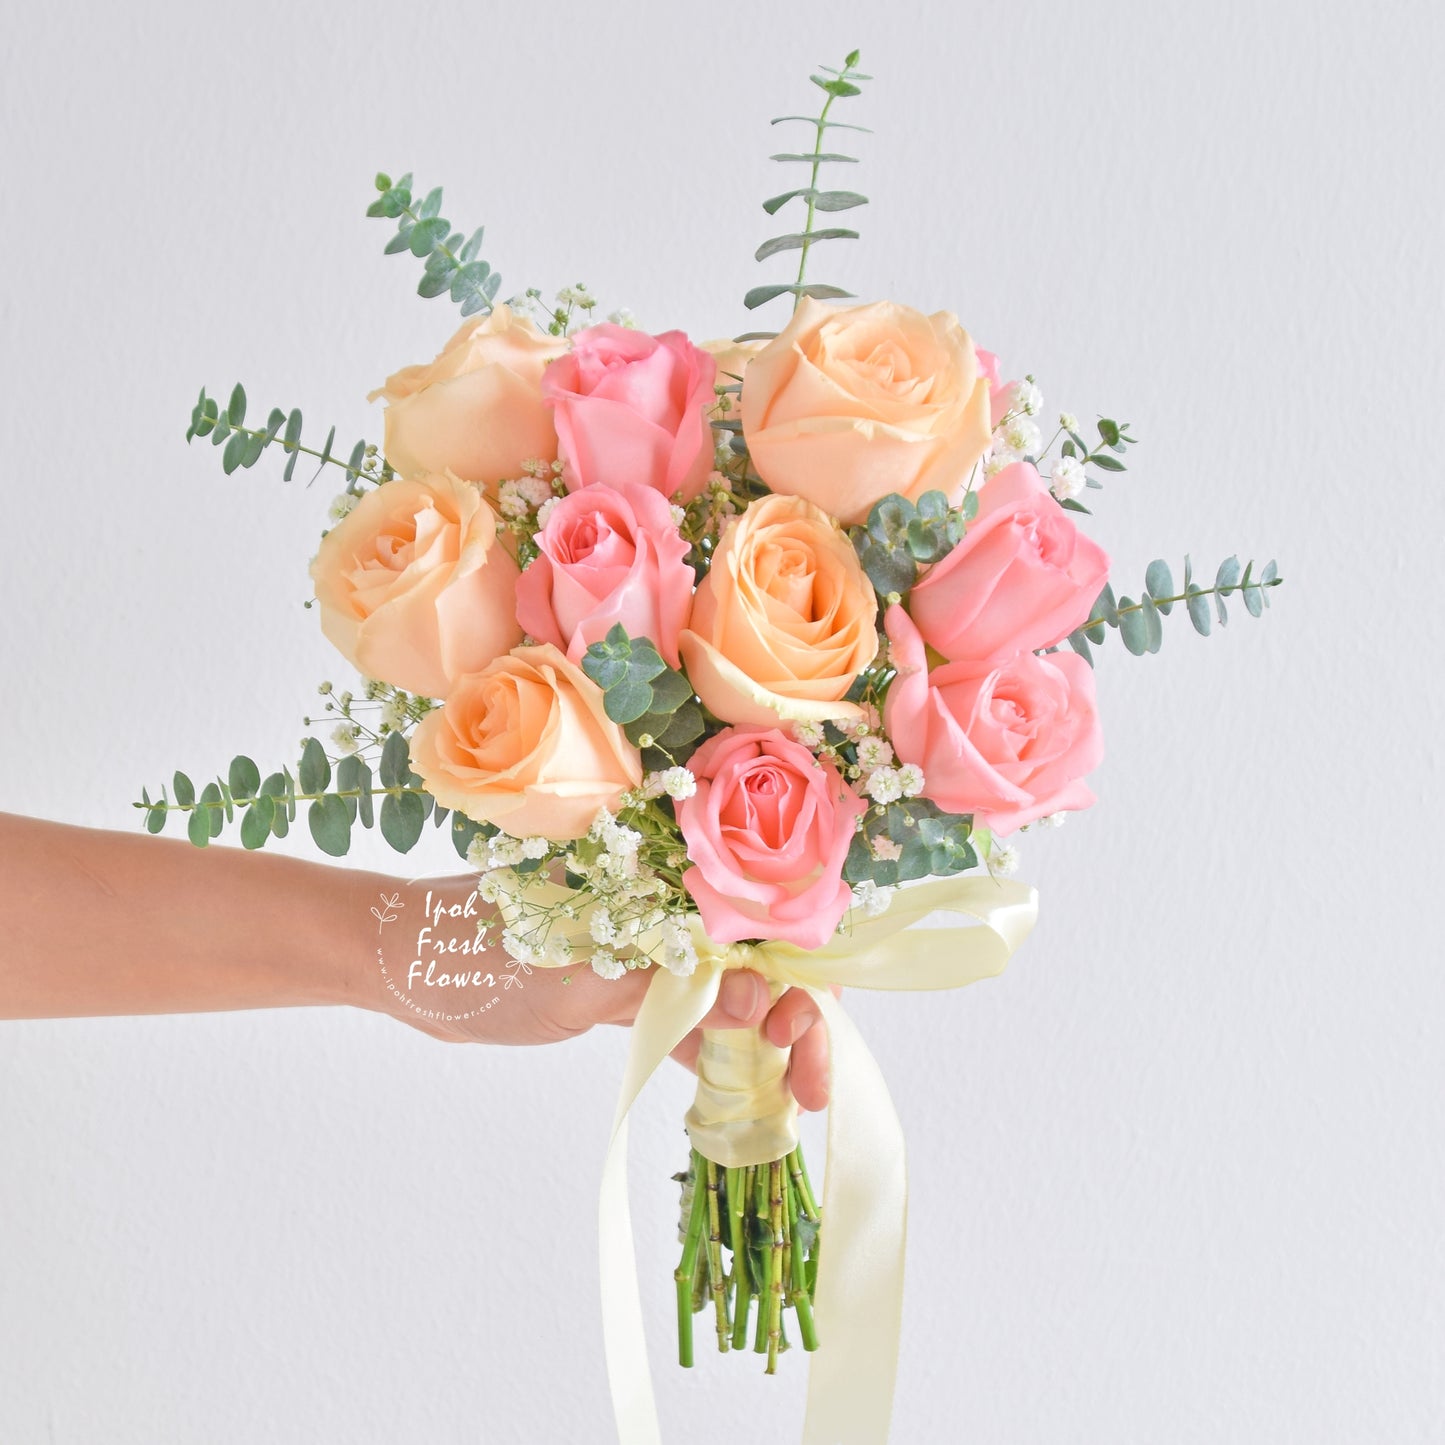 Leslie Bridal Bouquet| Personalized wedding & ROM flowers